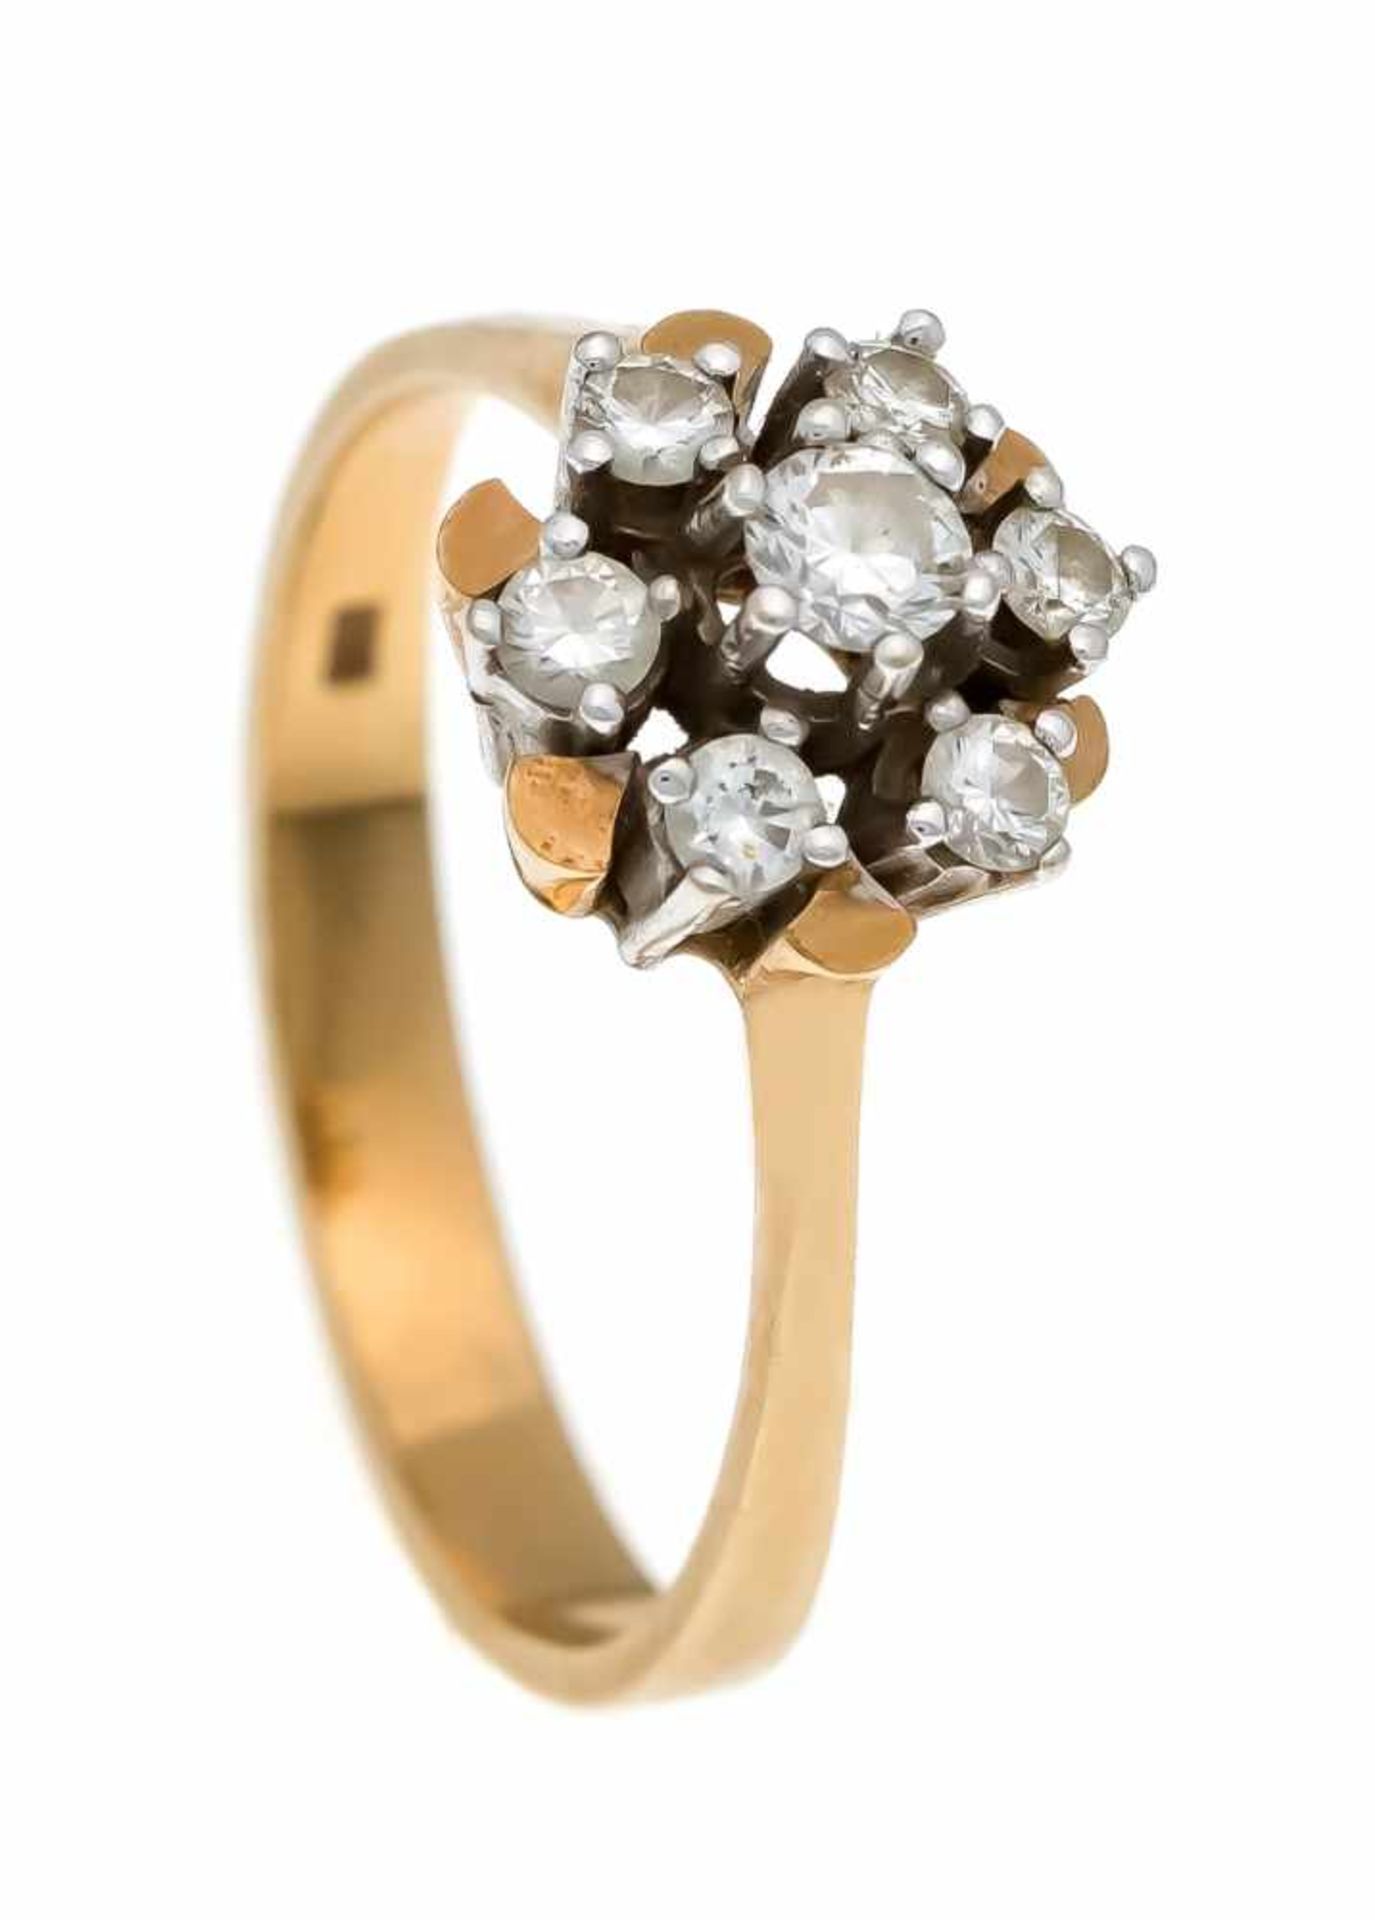 Brillant-Ring GG/WG 585/000 mit 7 Brillanten, zus. 0,40 ct W/SI, RG 58, 3,4 gBrilliant ring GG /